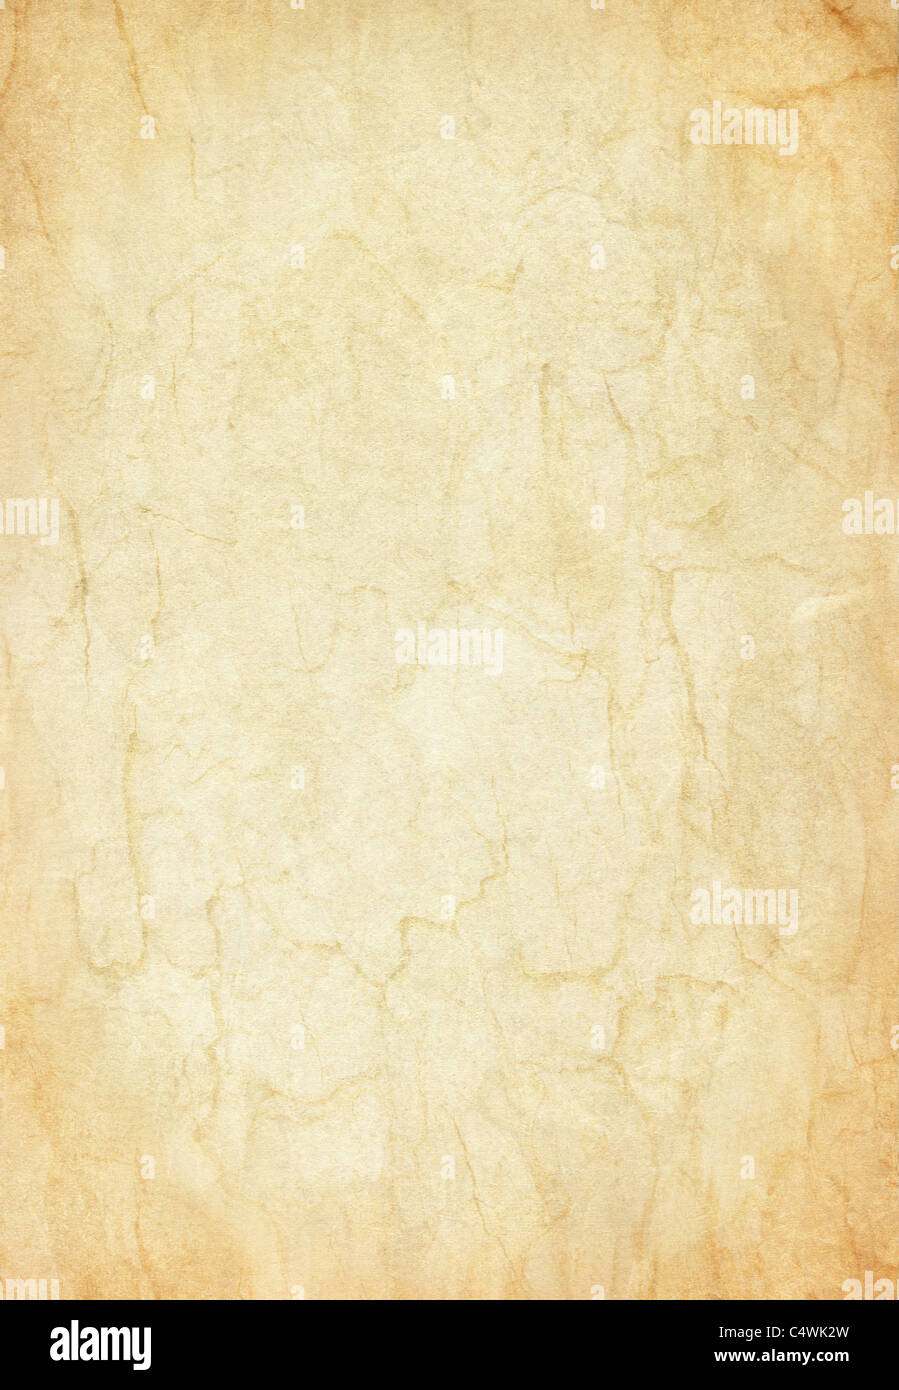 Grunge paper texture background Stock Photo